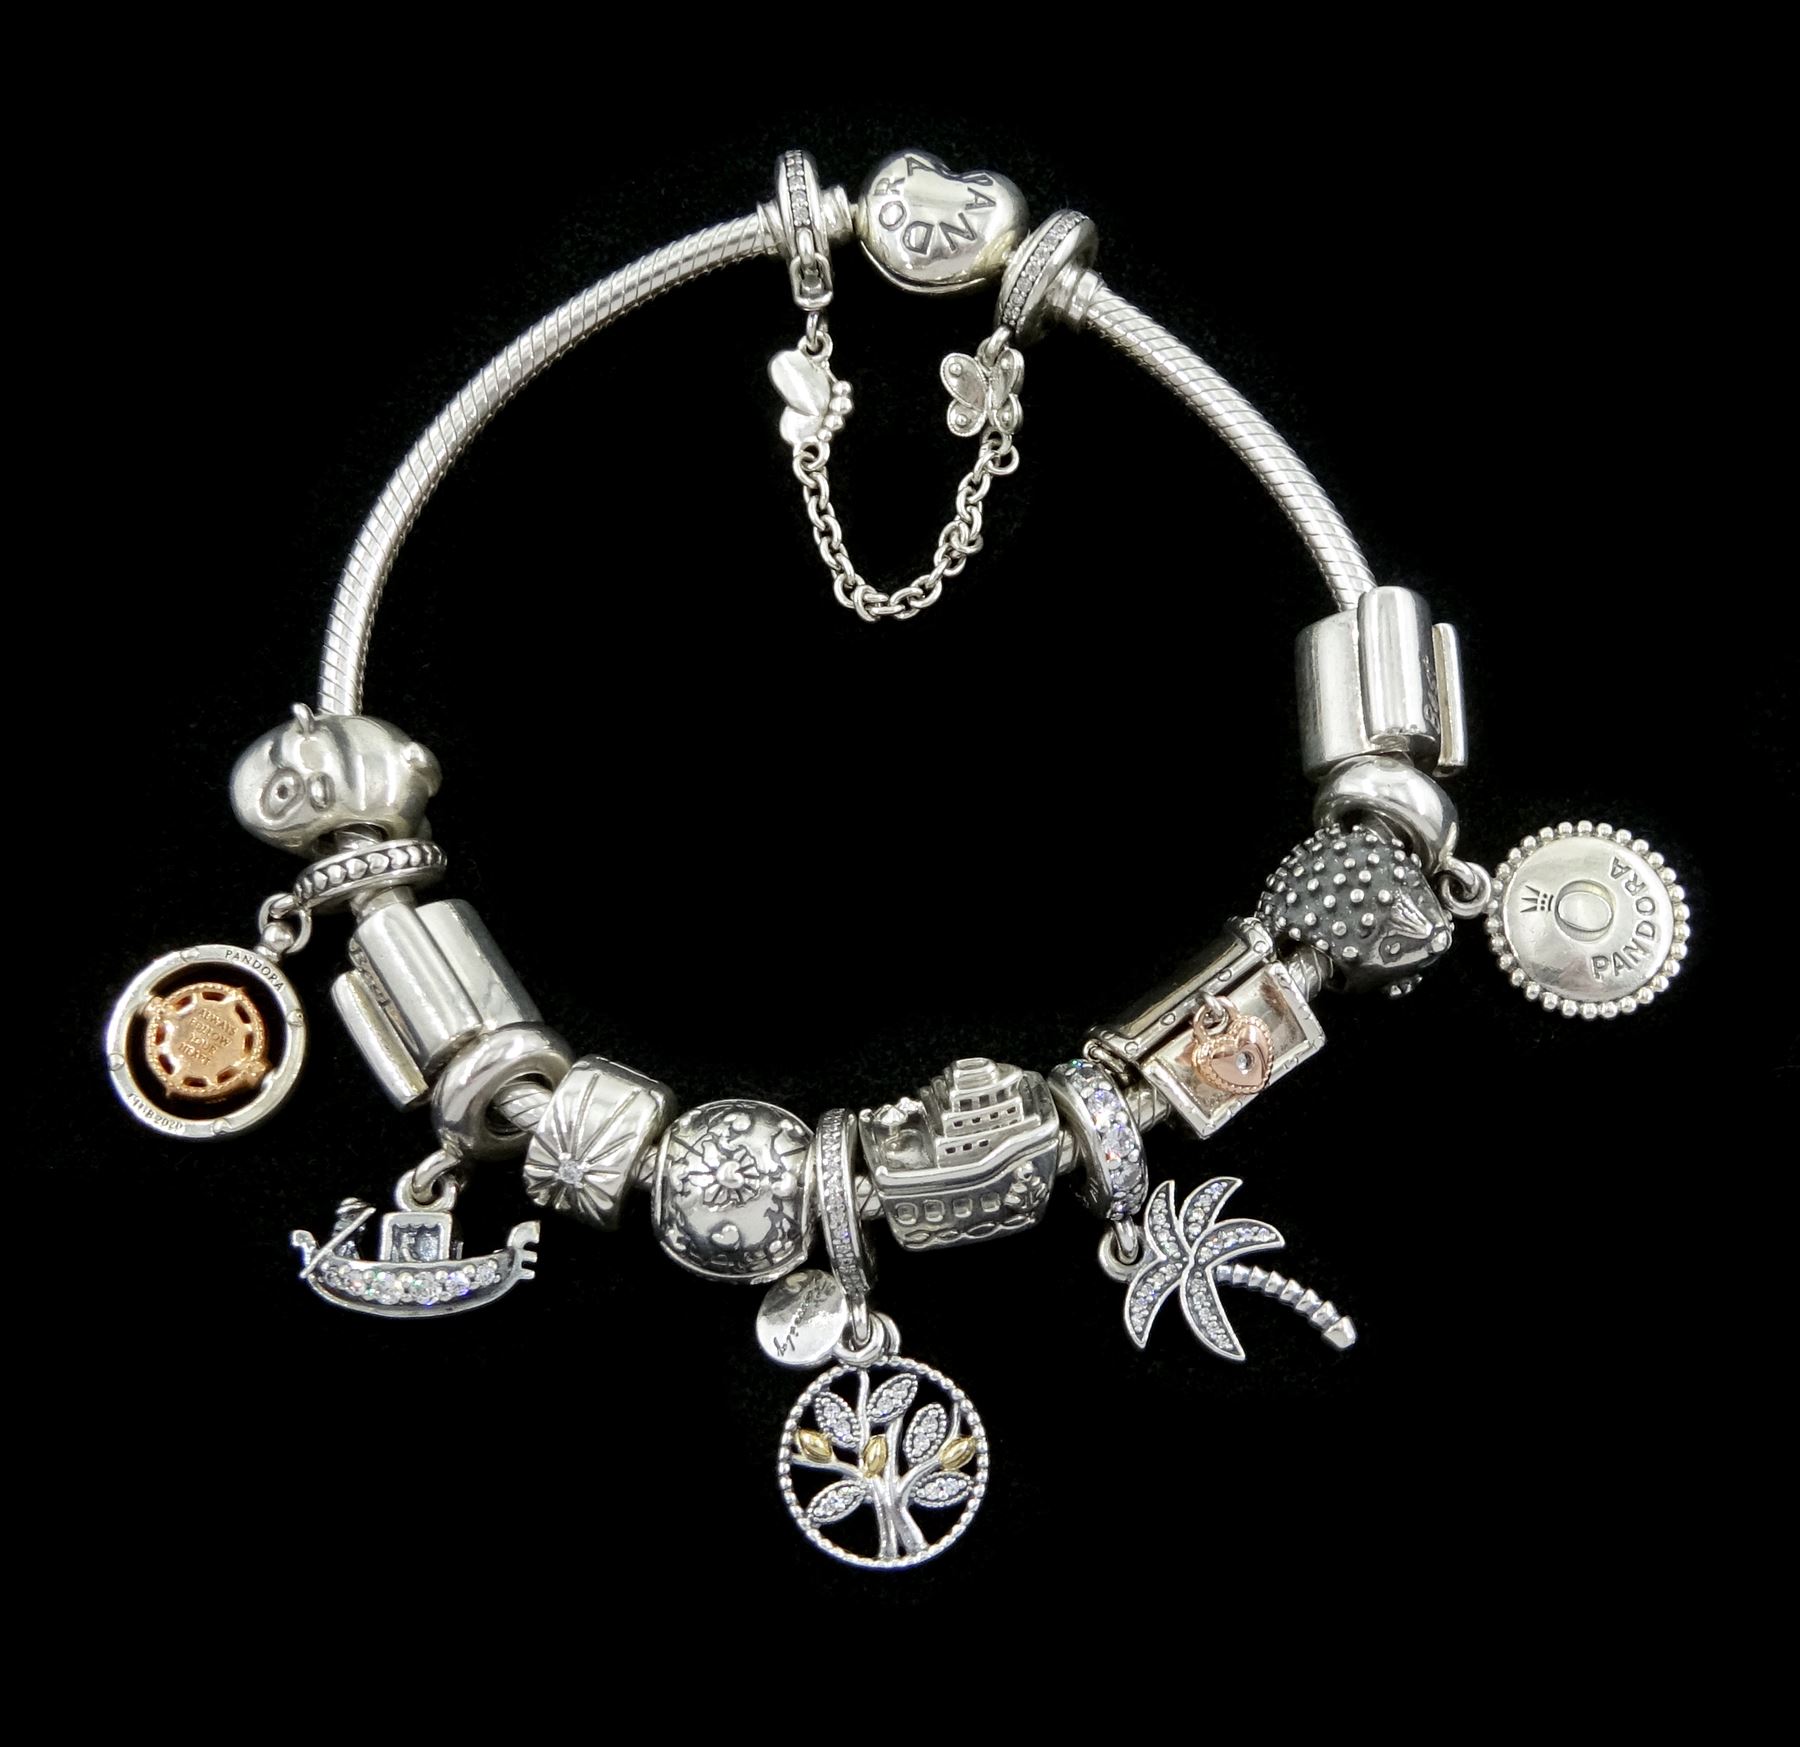 Pandora Moments heart clasp silver bracelet with thirteen silver Pandora charms and a silver Pandora